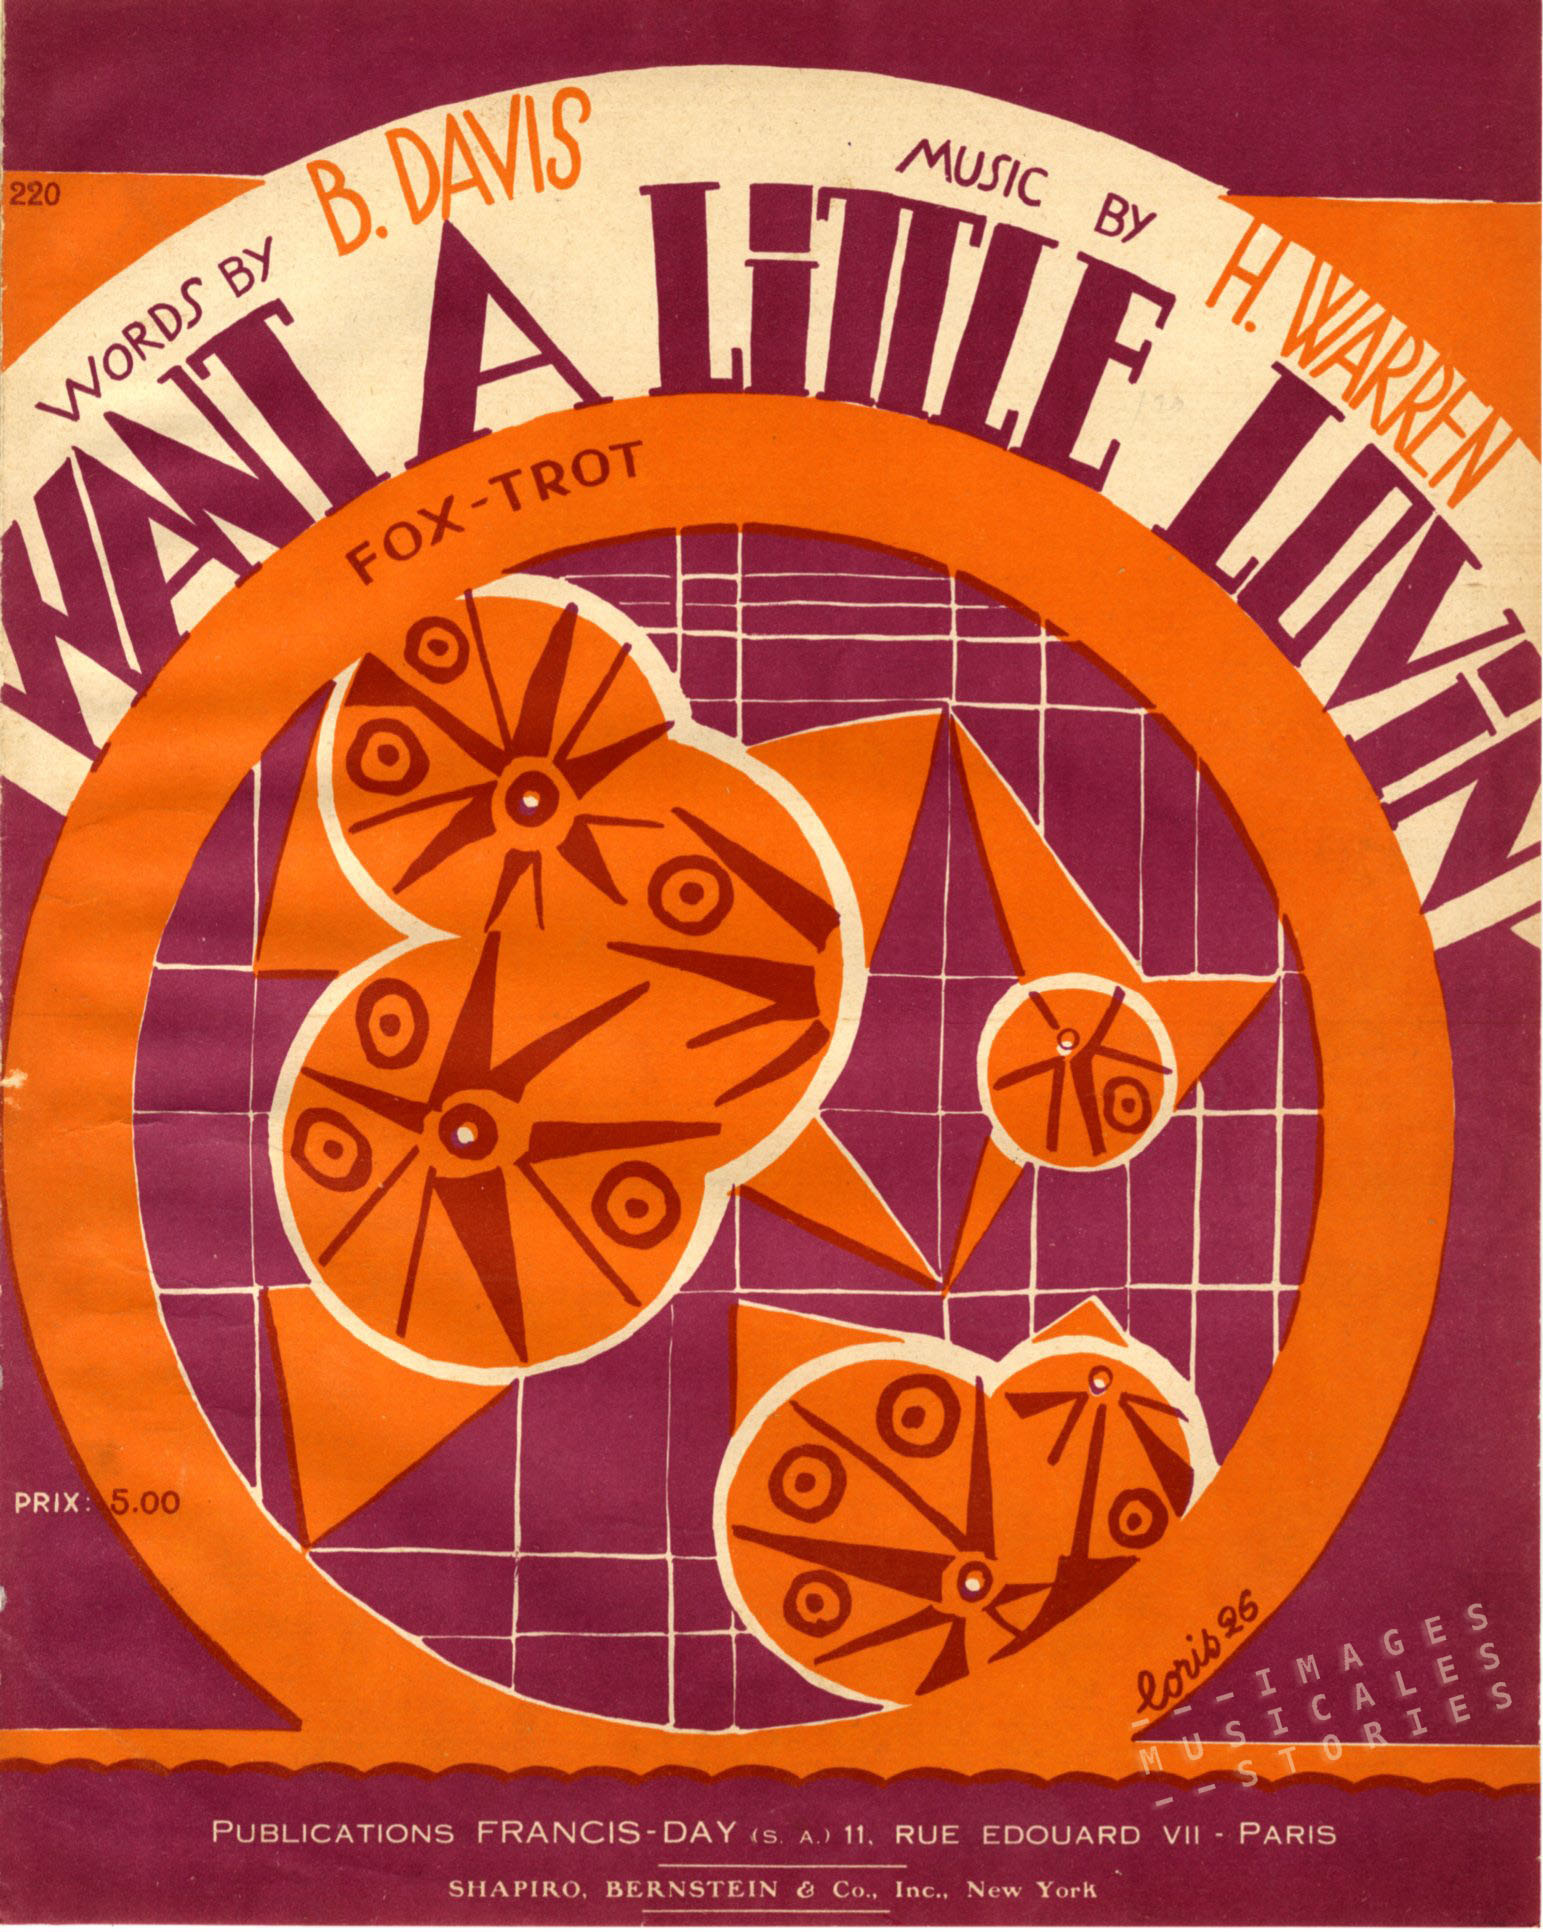 Sheet music cover designed by Fabien Loris. (1925)